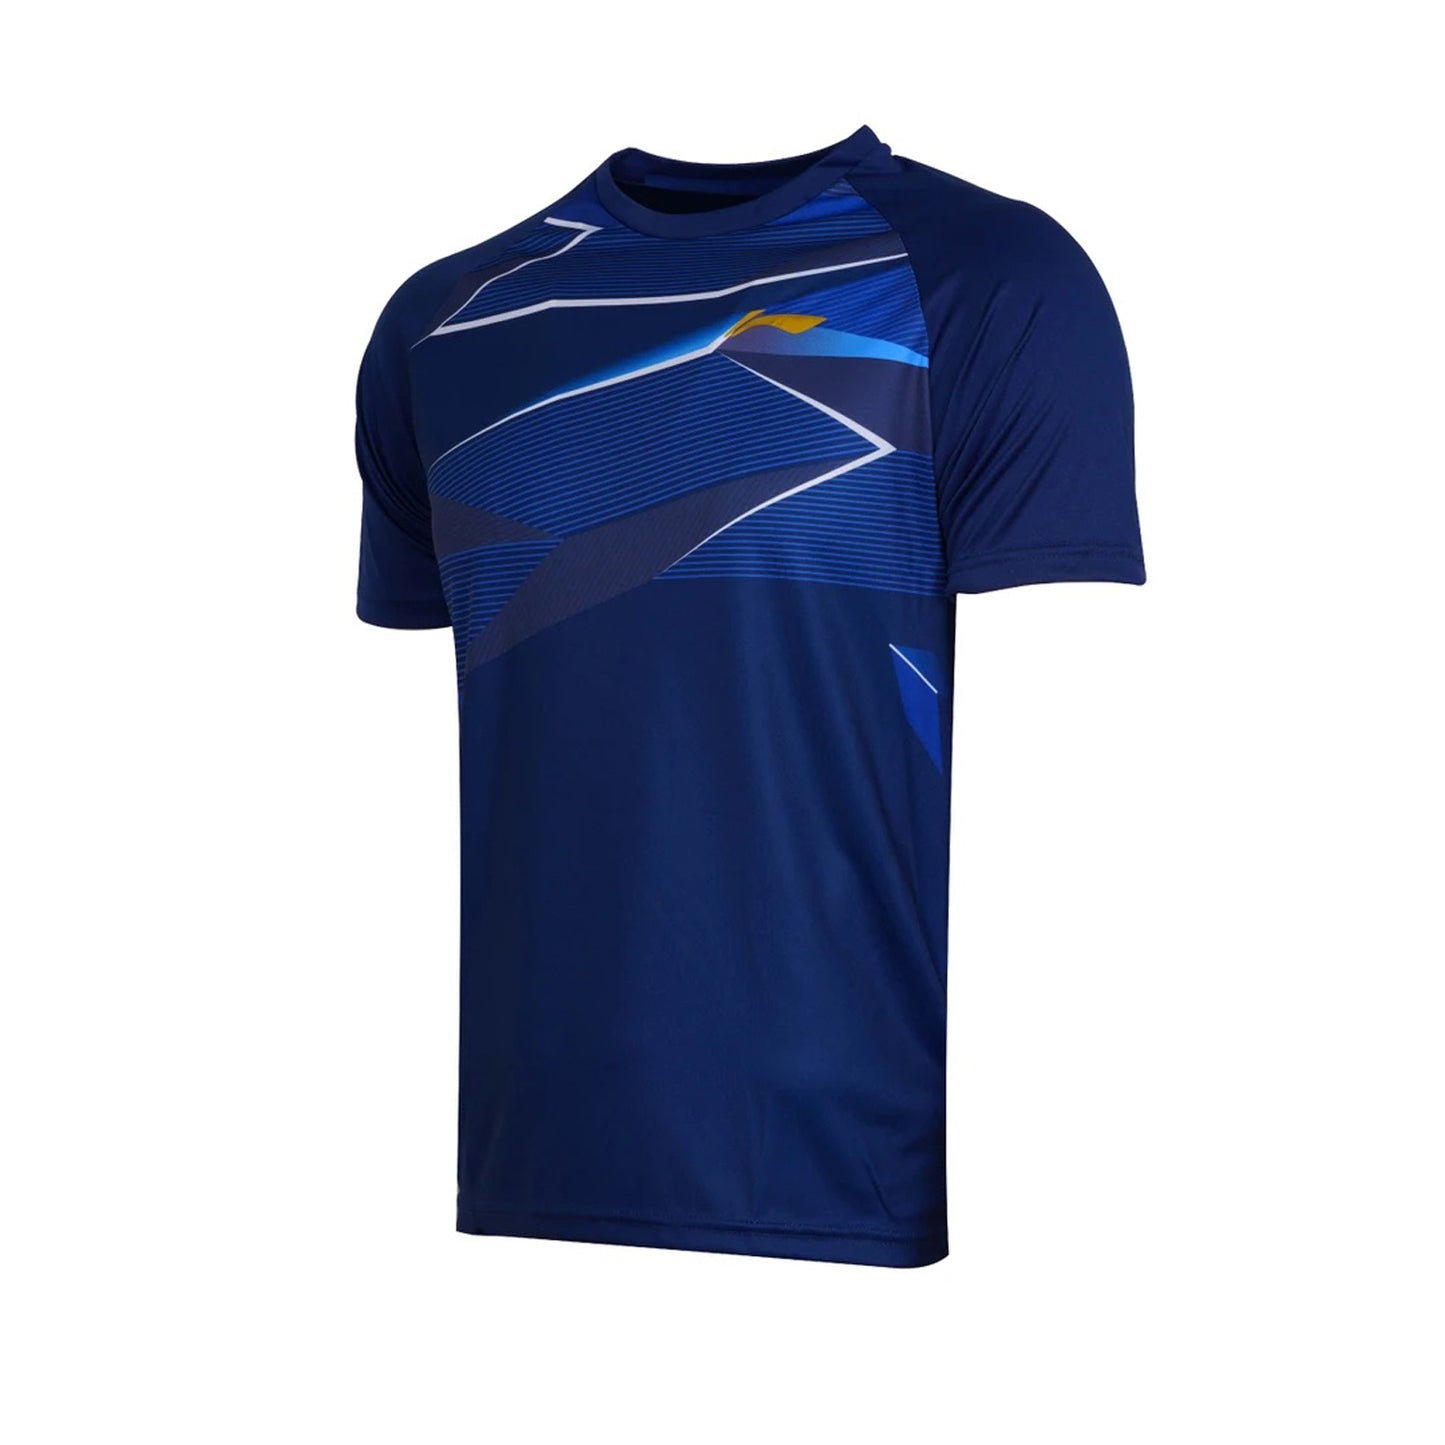 Li-Ning ATSR685 Round Neck Badminton Tshirt, Navy - Best Price online Prokicksports.com